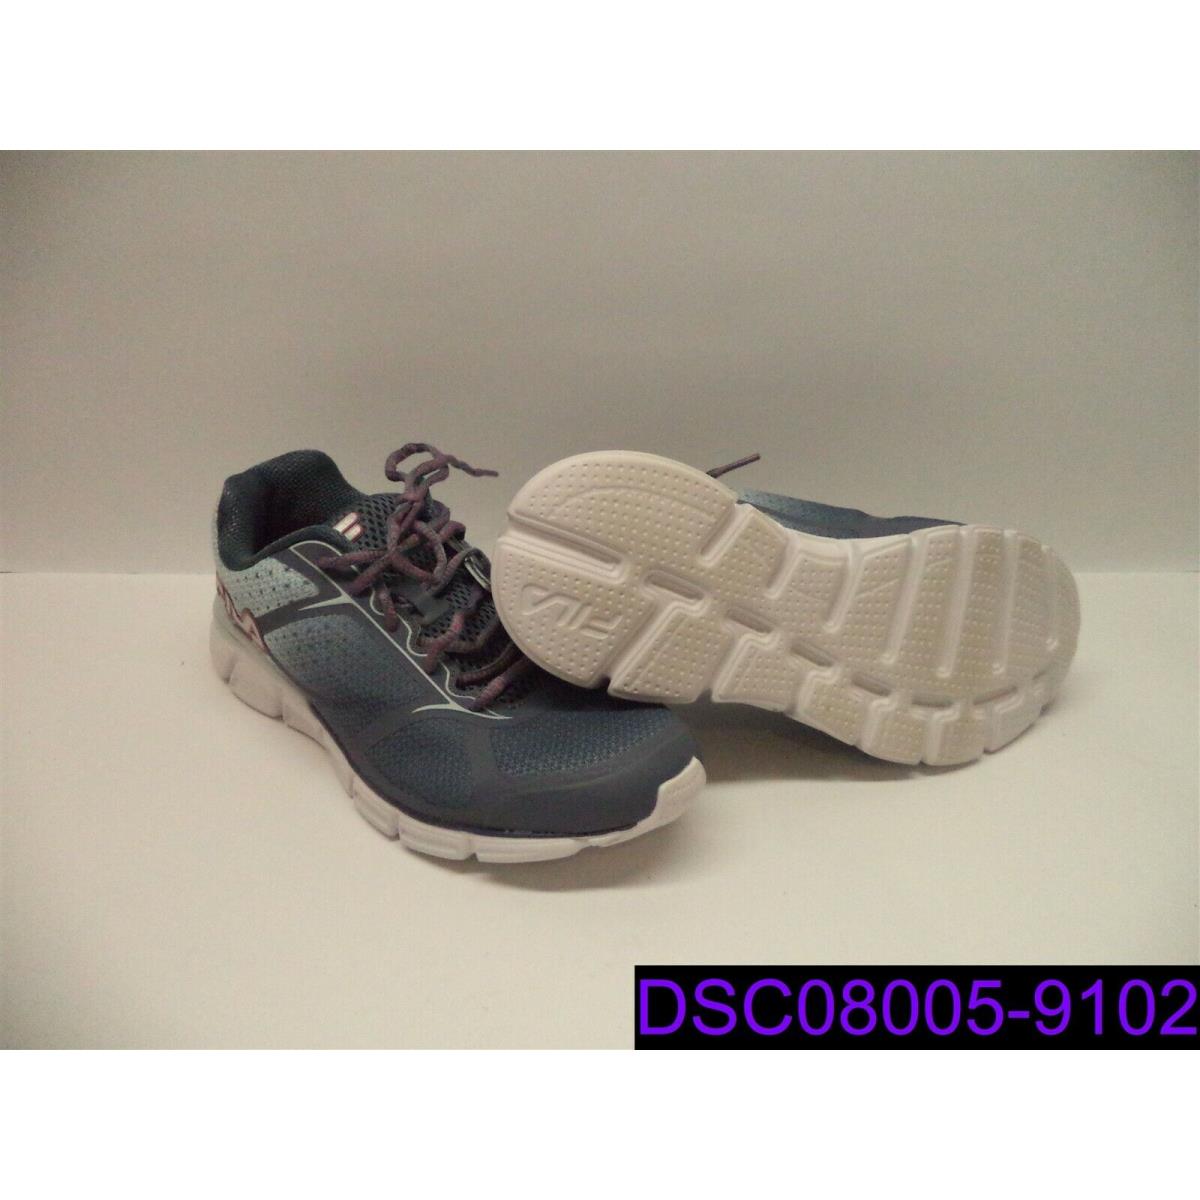 Size 9.5 Women Shoes Fila Memory Prime Force 2 Blue 5RM00525-260